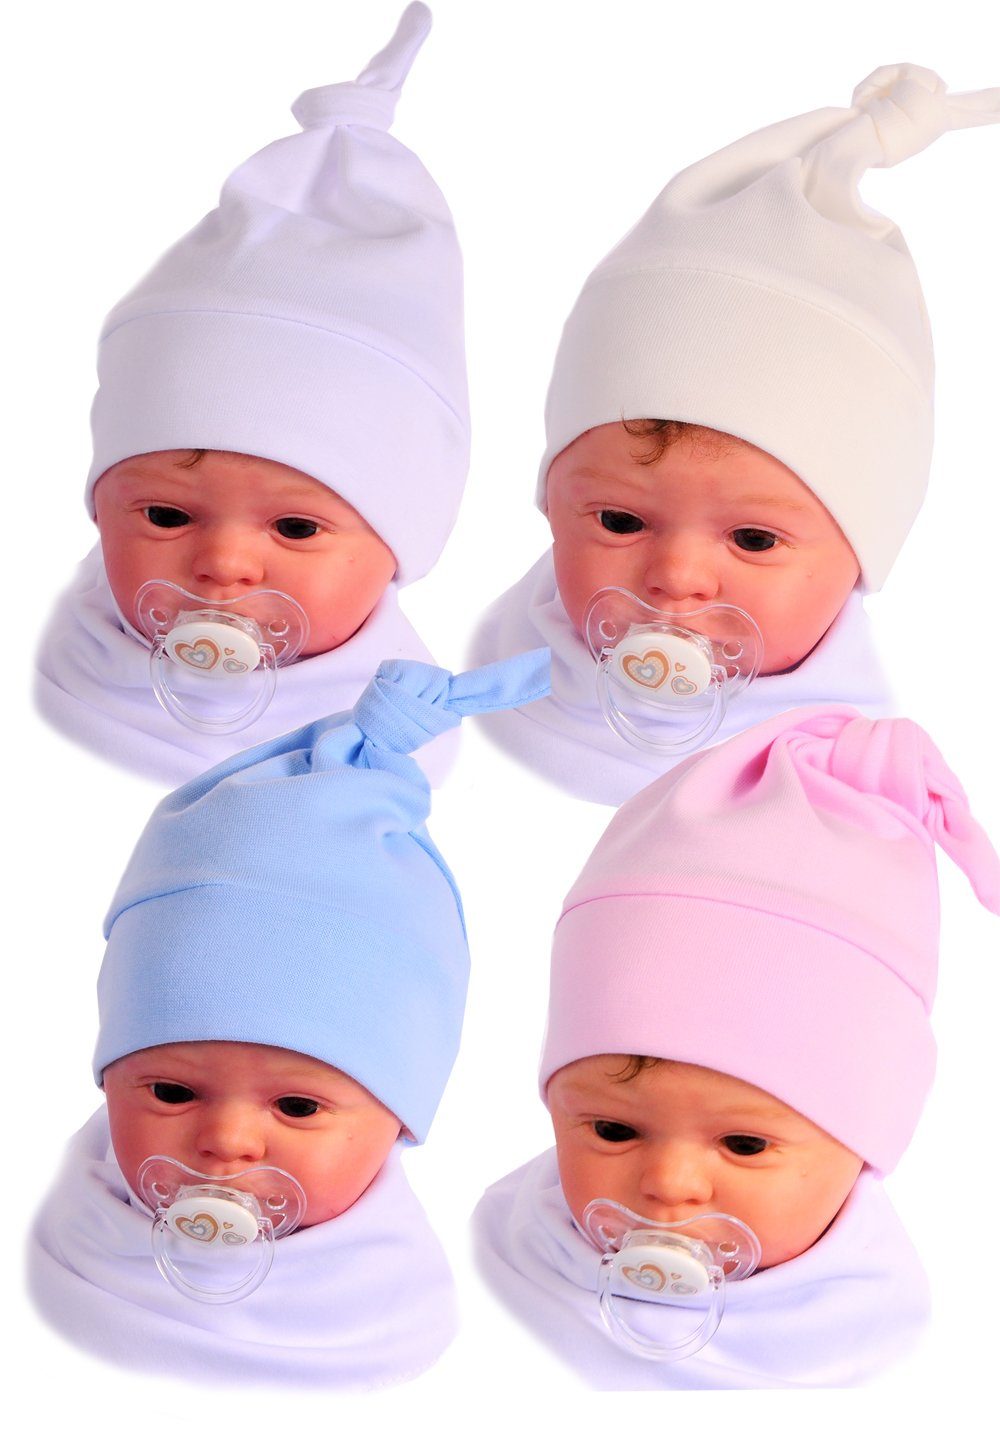 La Bortini Erstlingsmütze Baby Mütze Baby Mützchen Knotenmütze für Neugeborene Blau